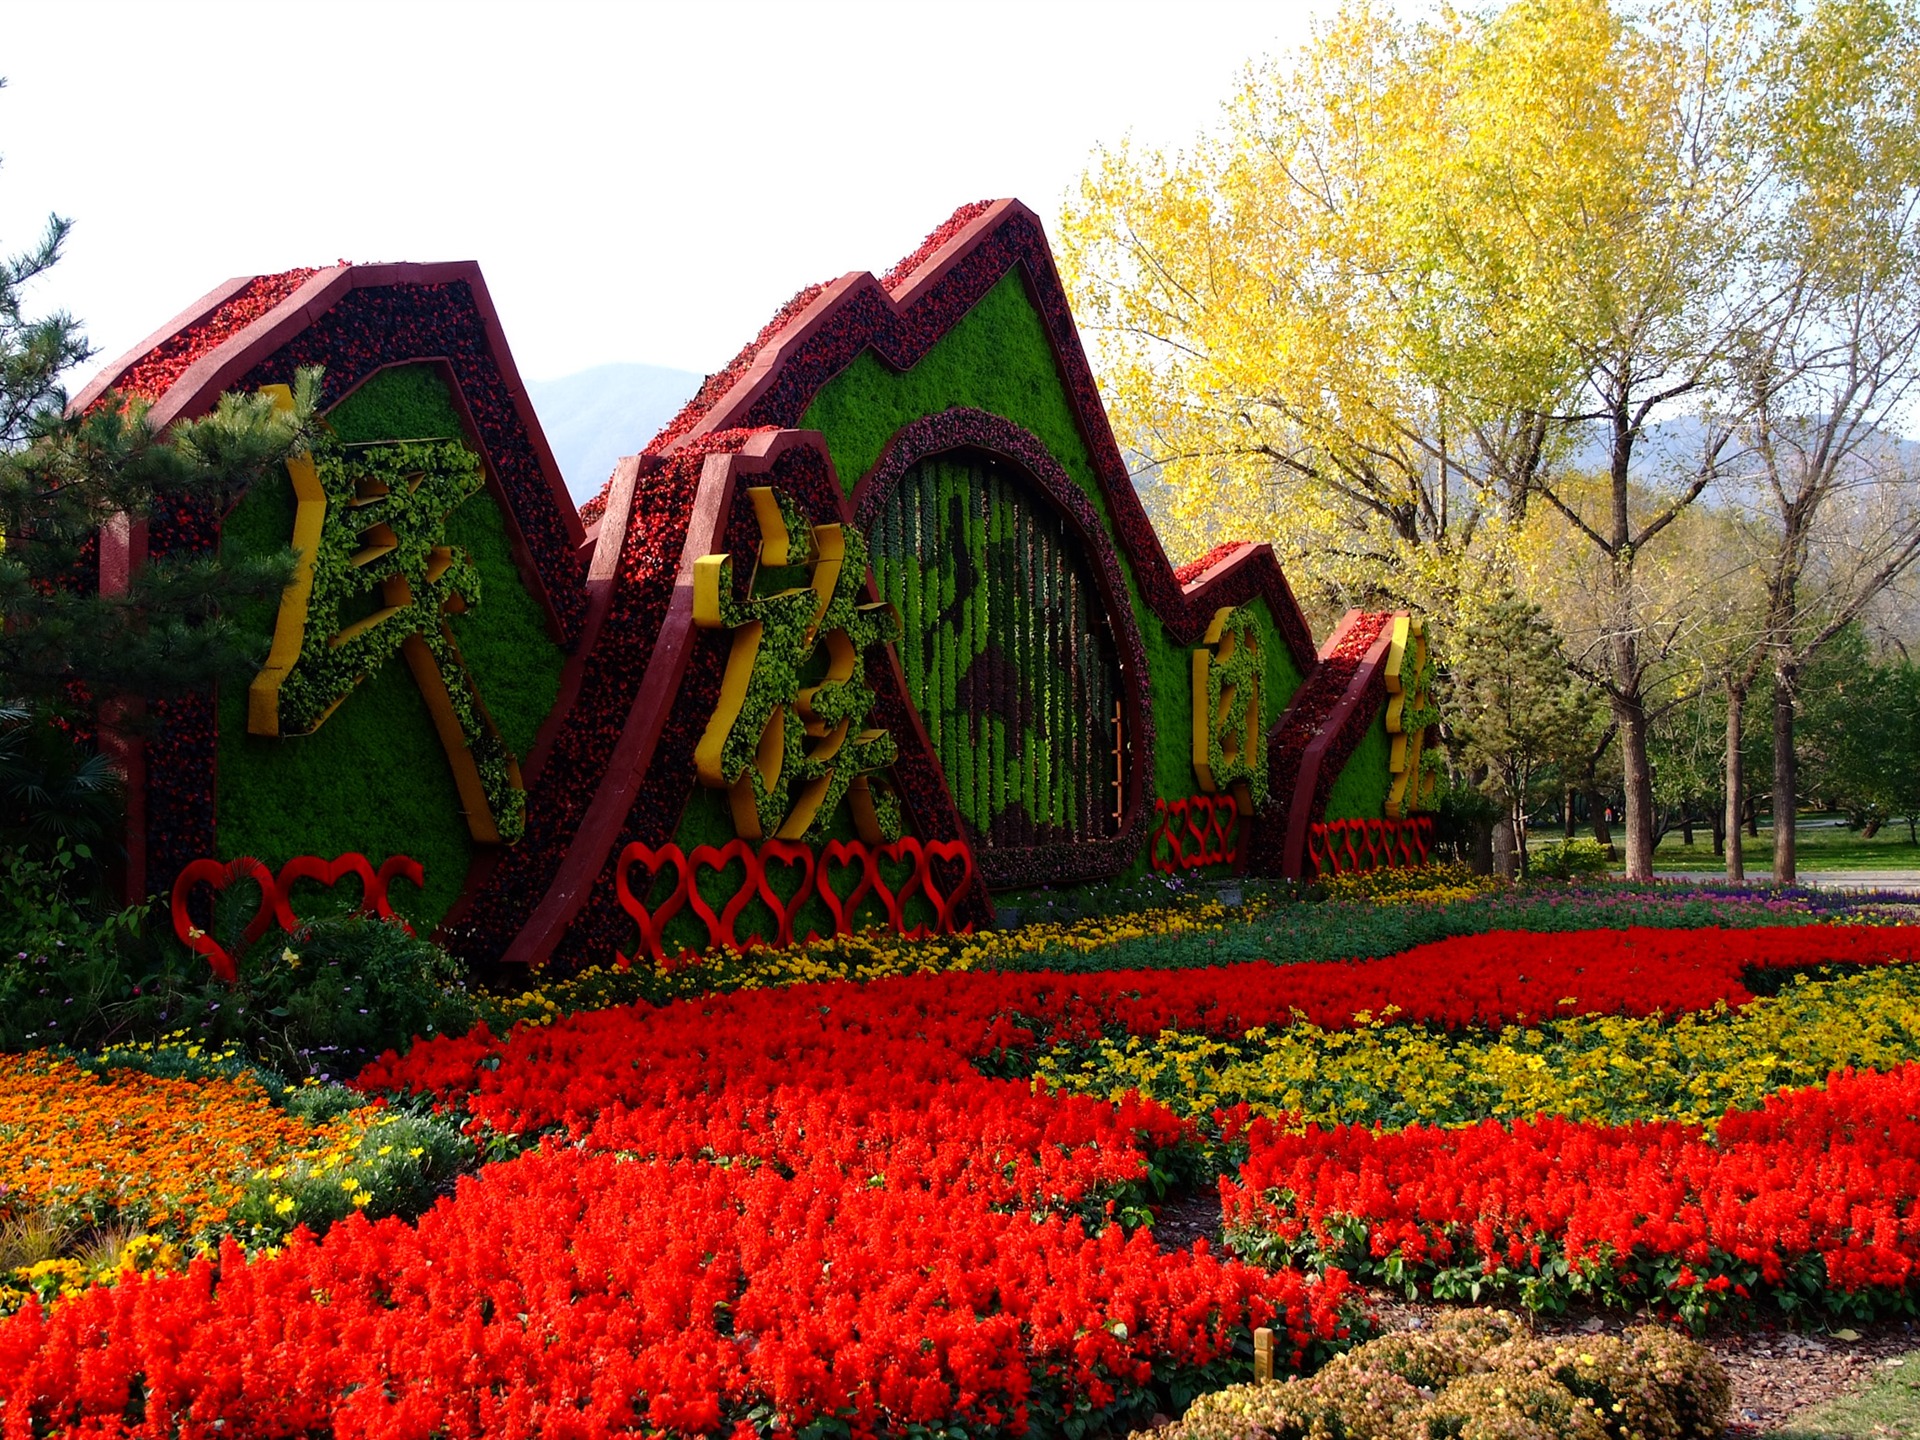 Xiangshan jardín de otoño (obras barras de refuerzo) #1 - 1920x1440